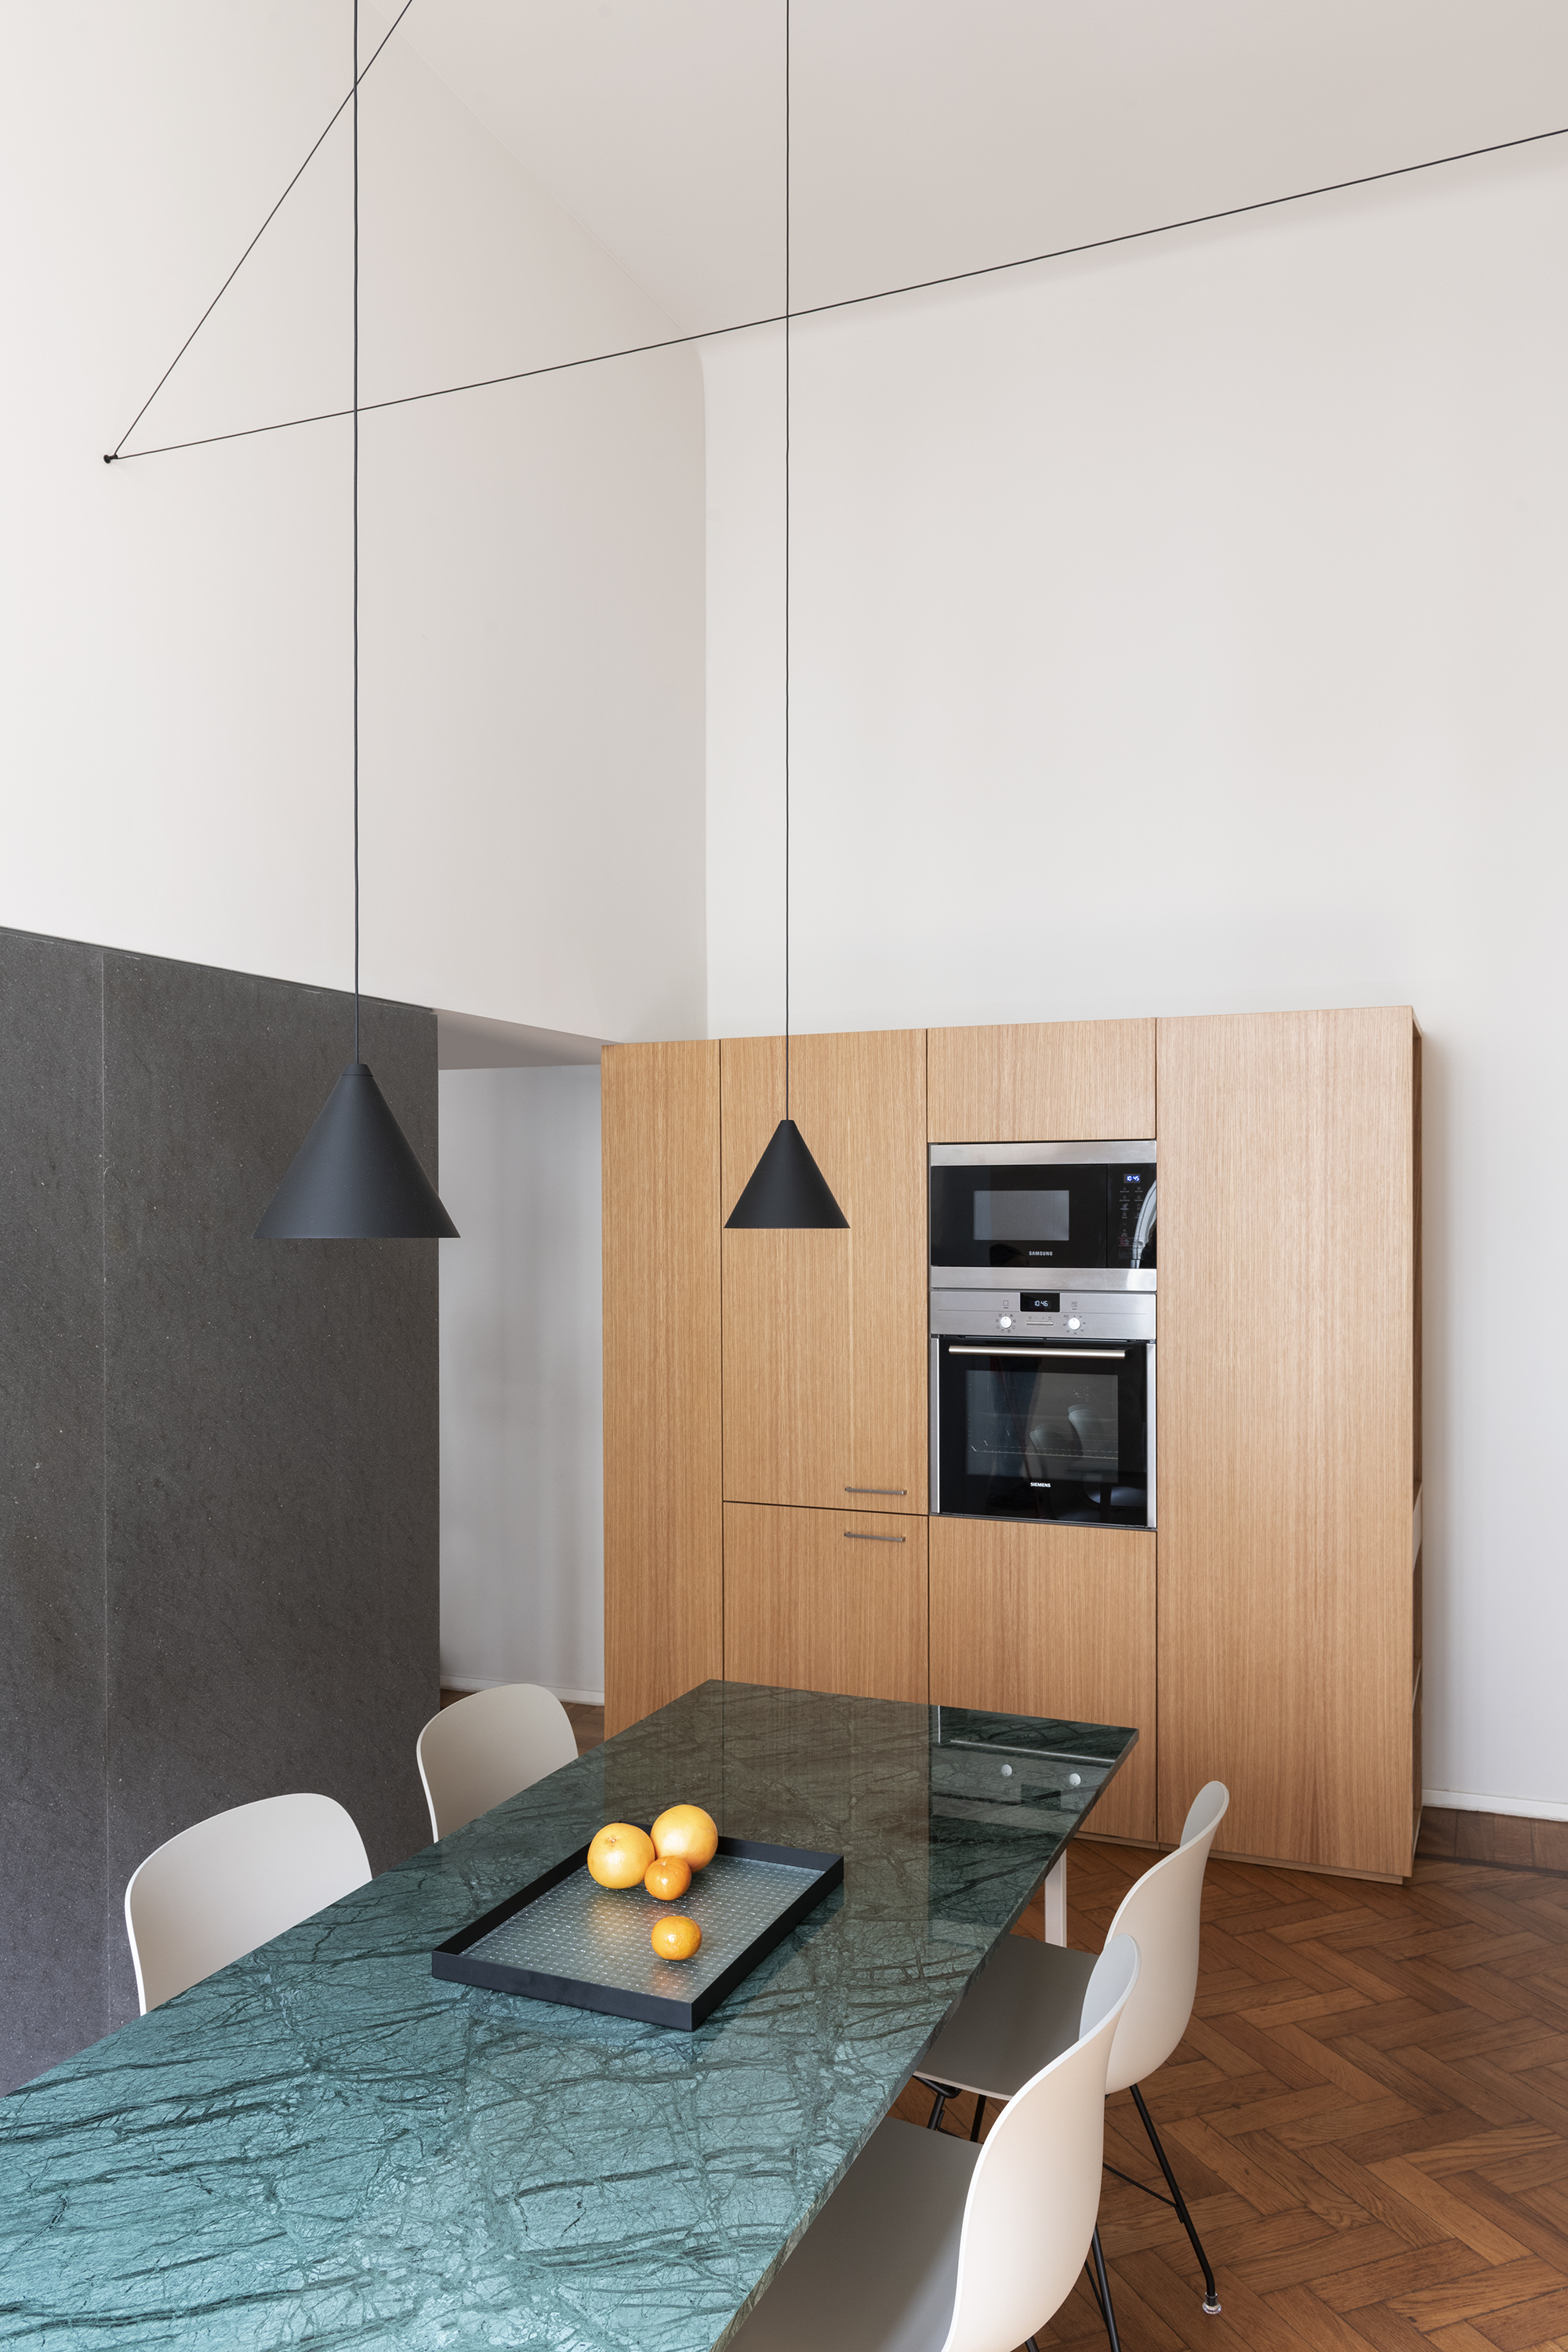 Apartment in Porta Venezia, Milan, Italy by studio wok